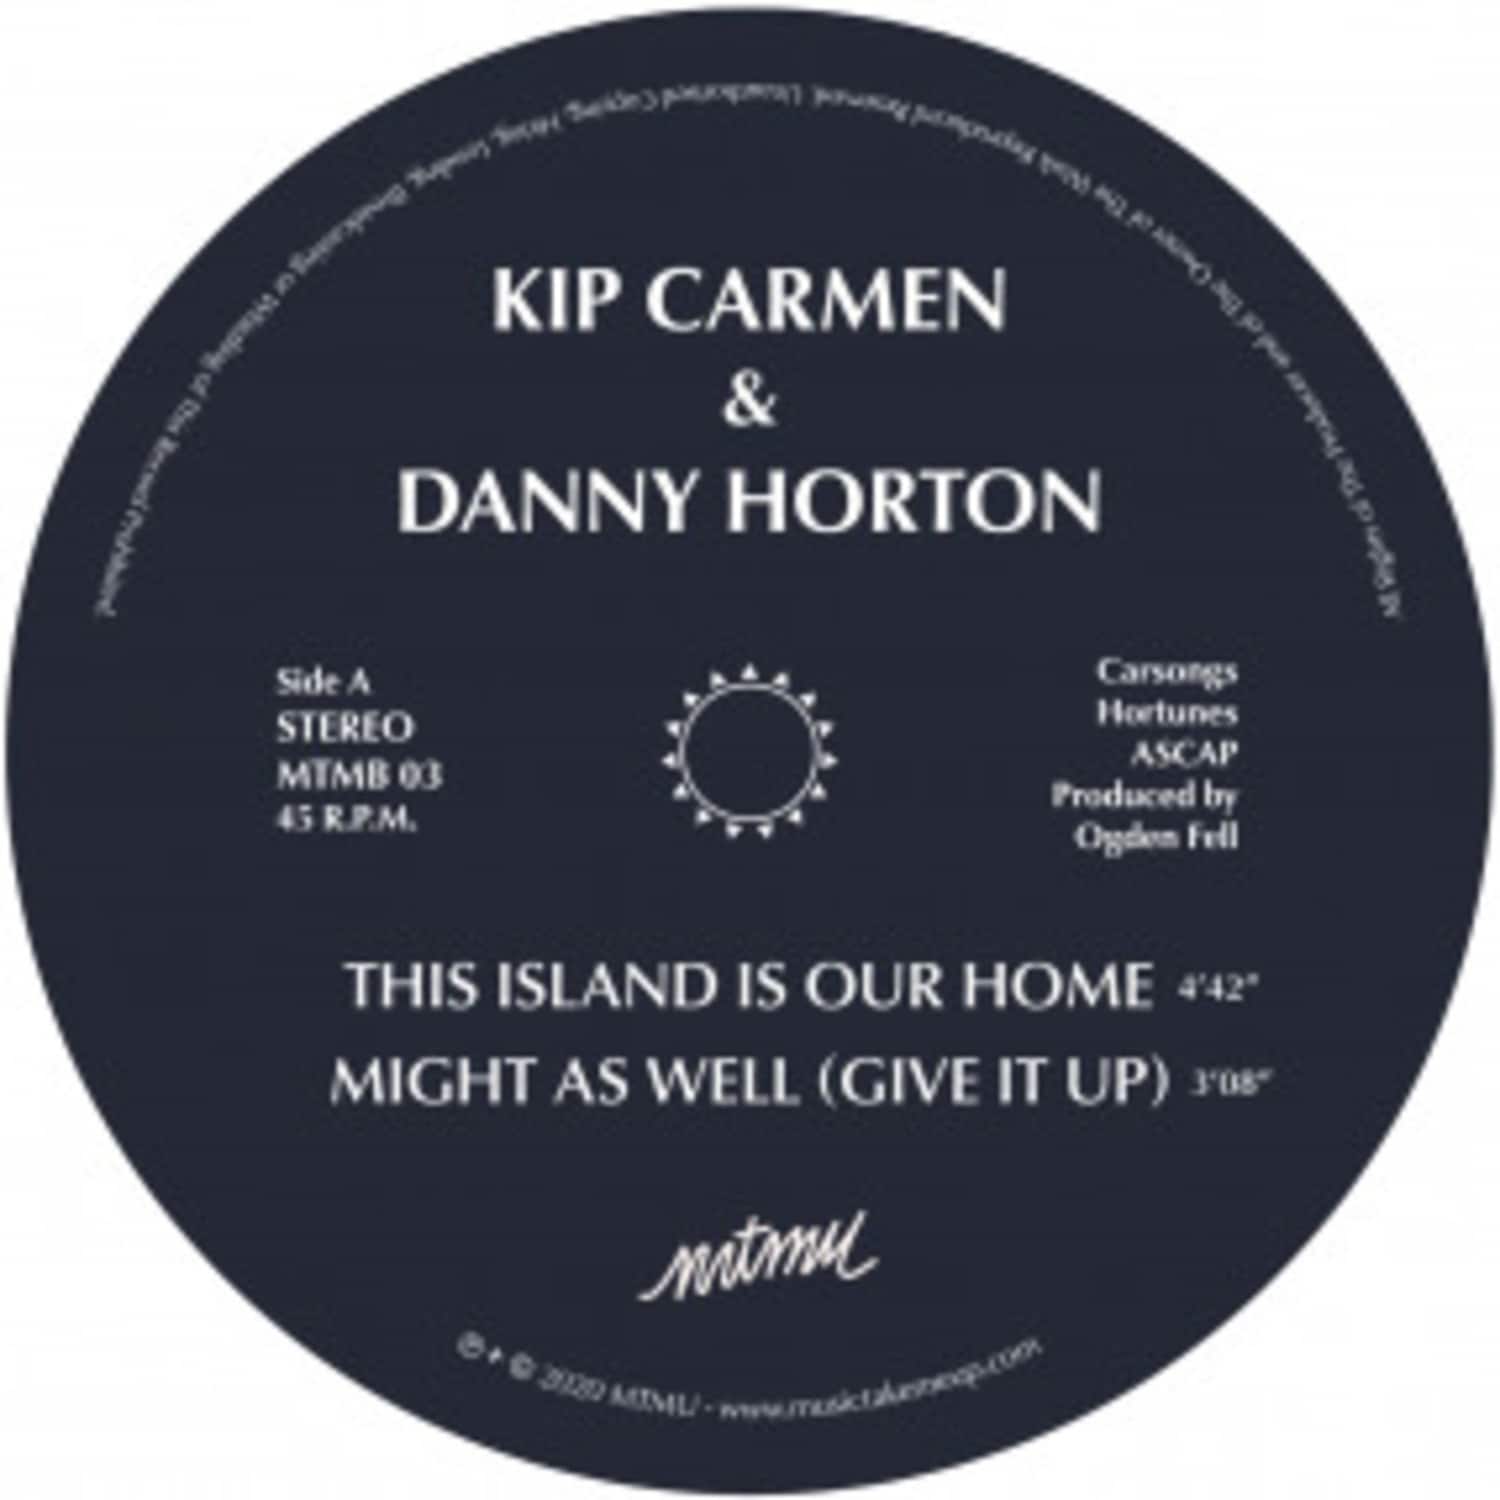 Kip Carmen & Danny Horton - THIS ISLAND IS OUR HOME